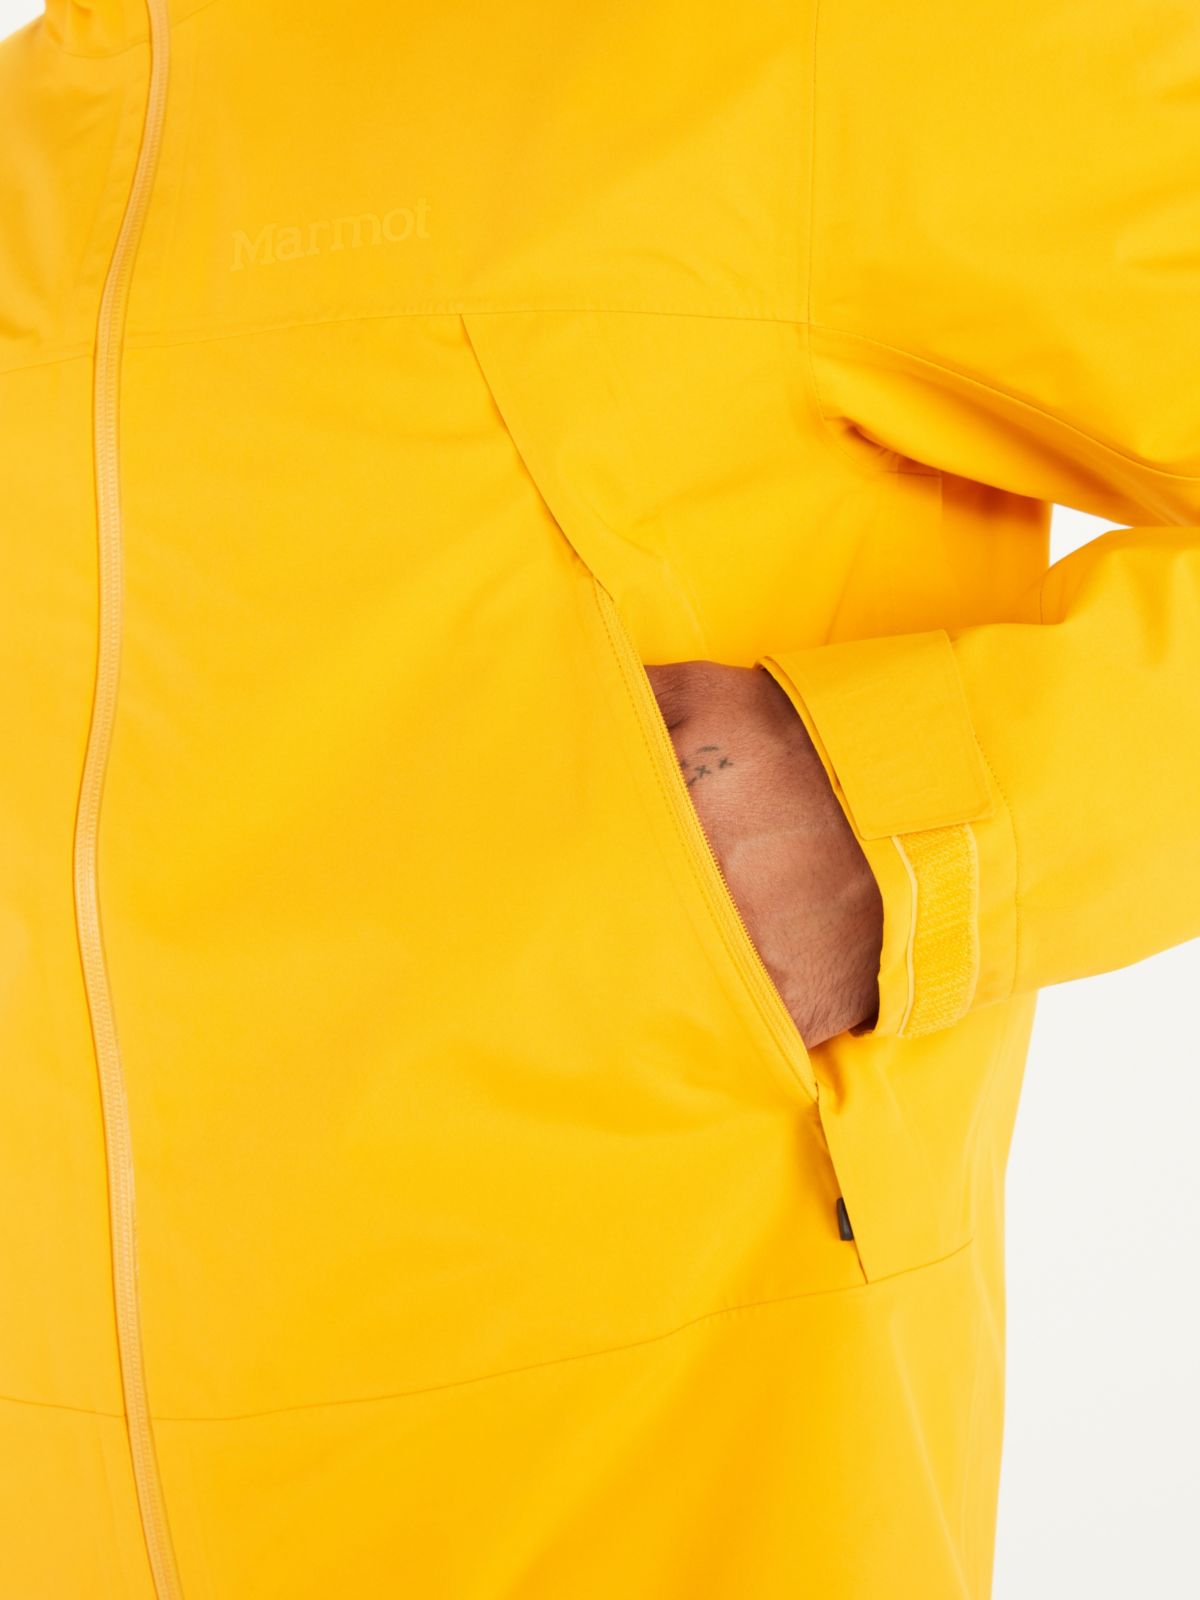 zip pocket for storage in jacket